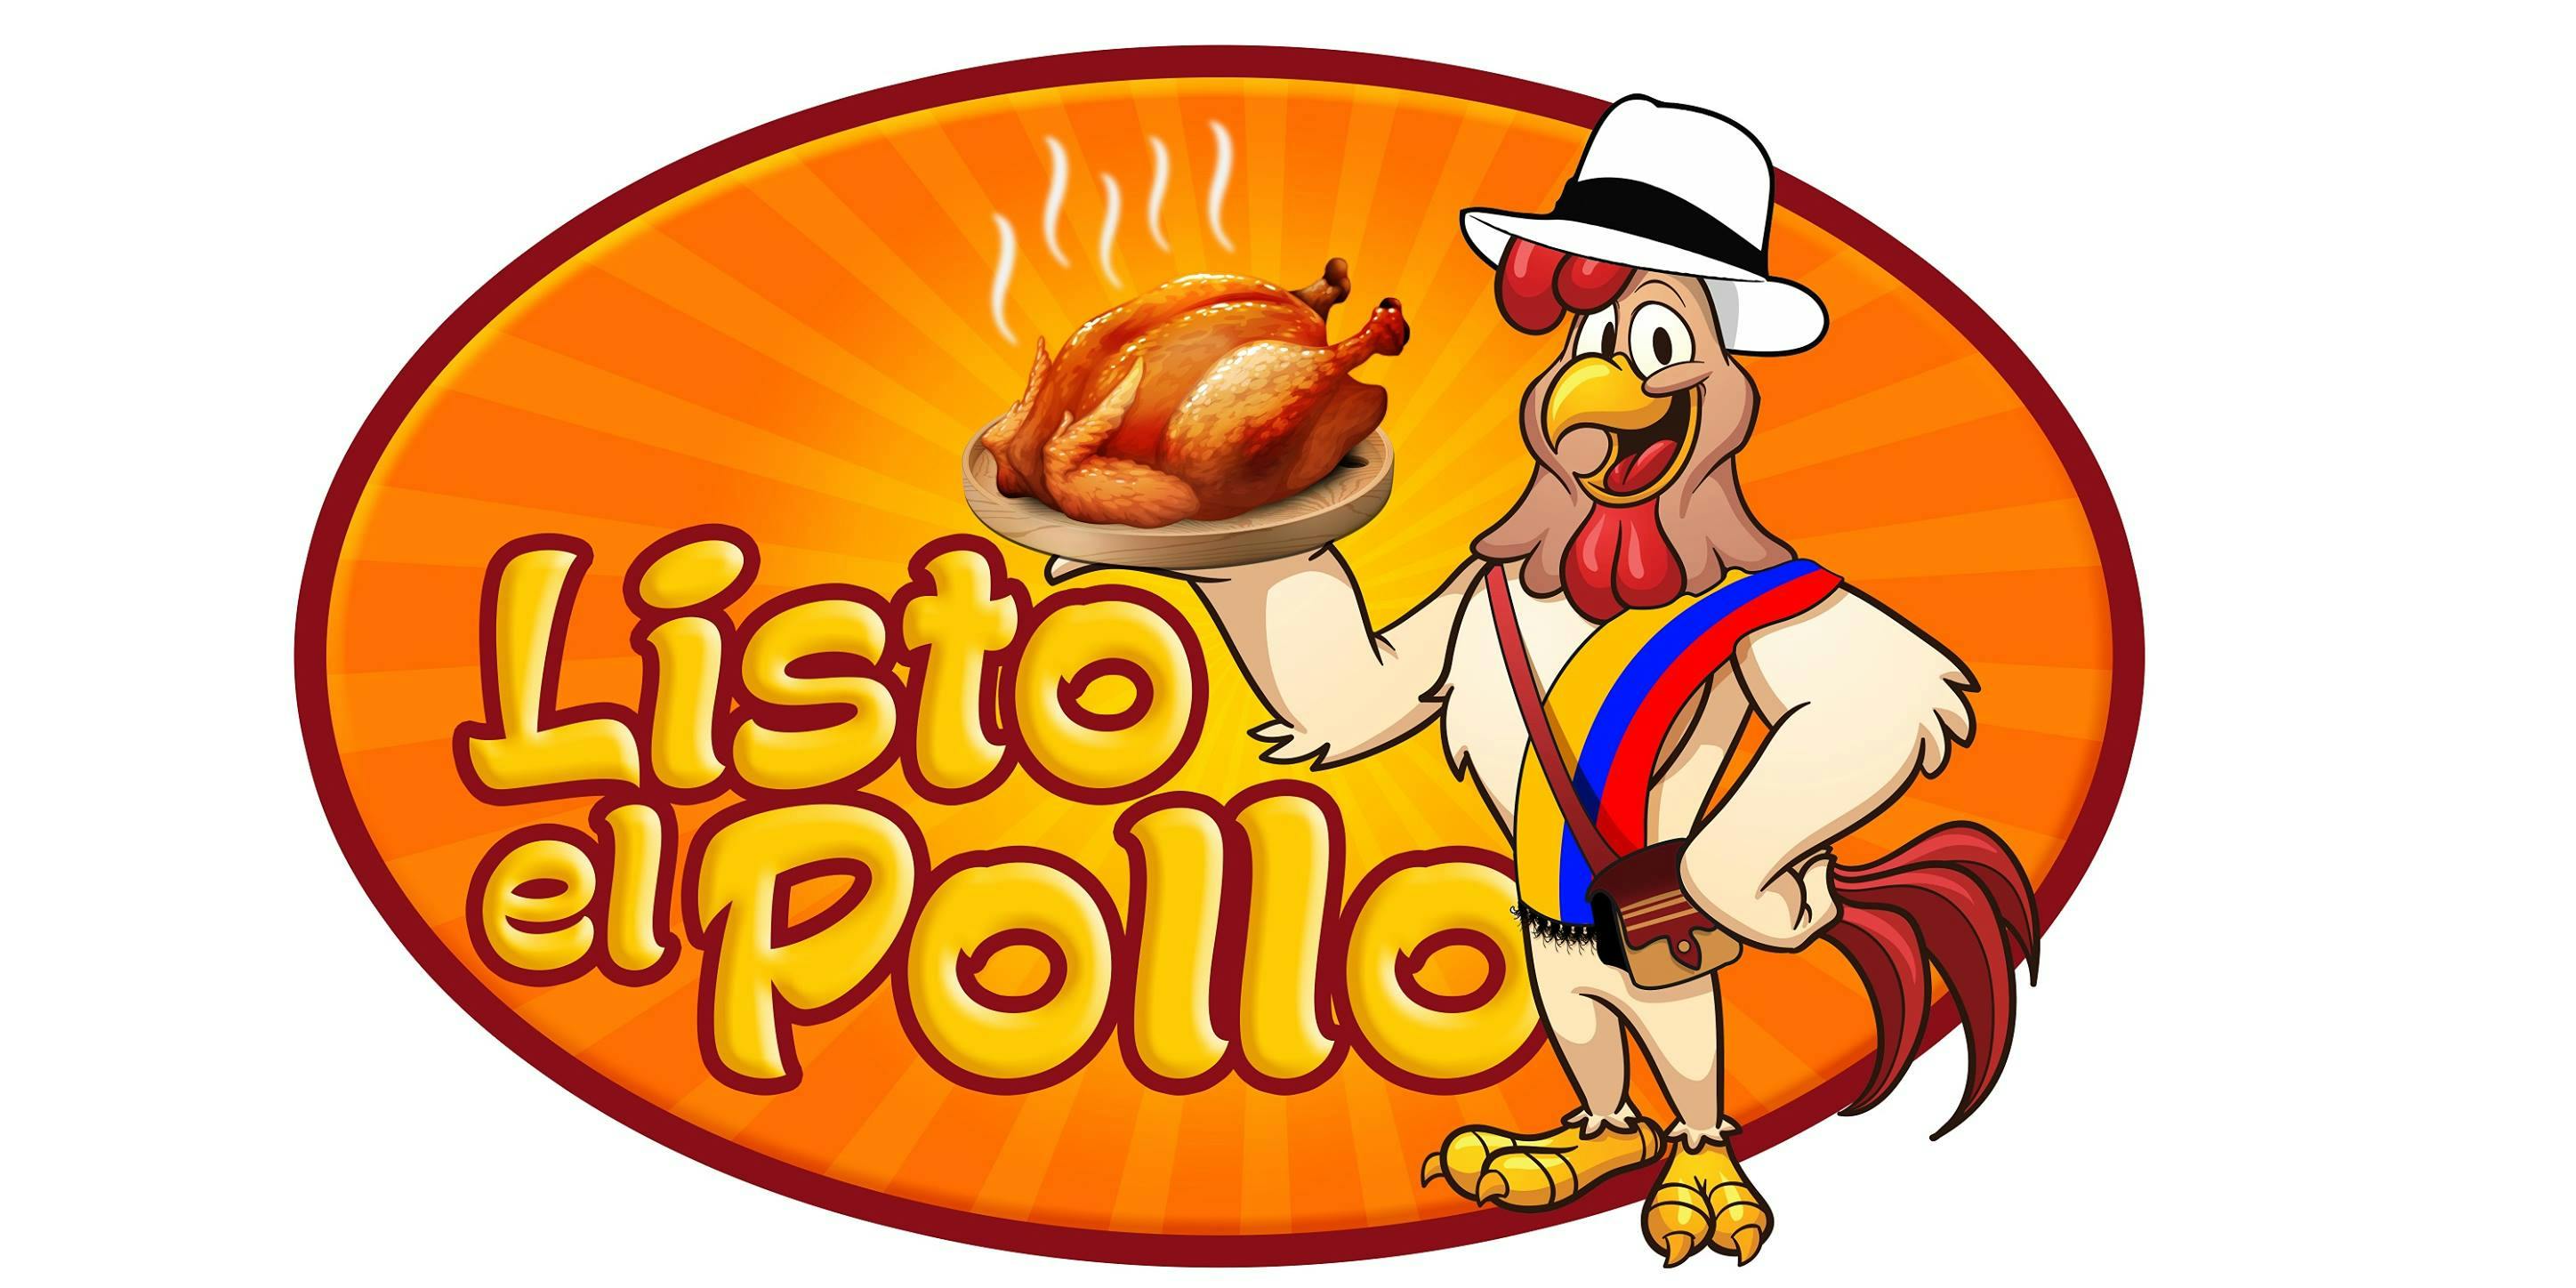 Listo el Pollo Logo